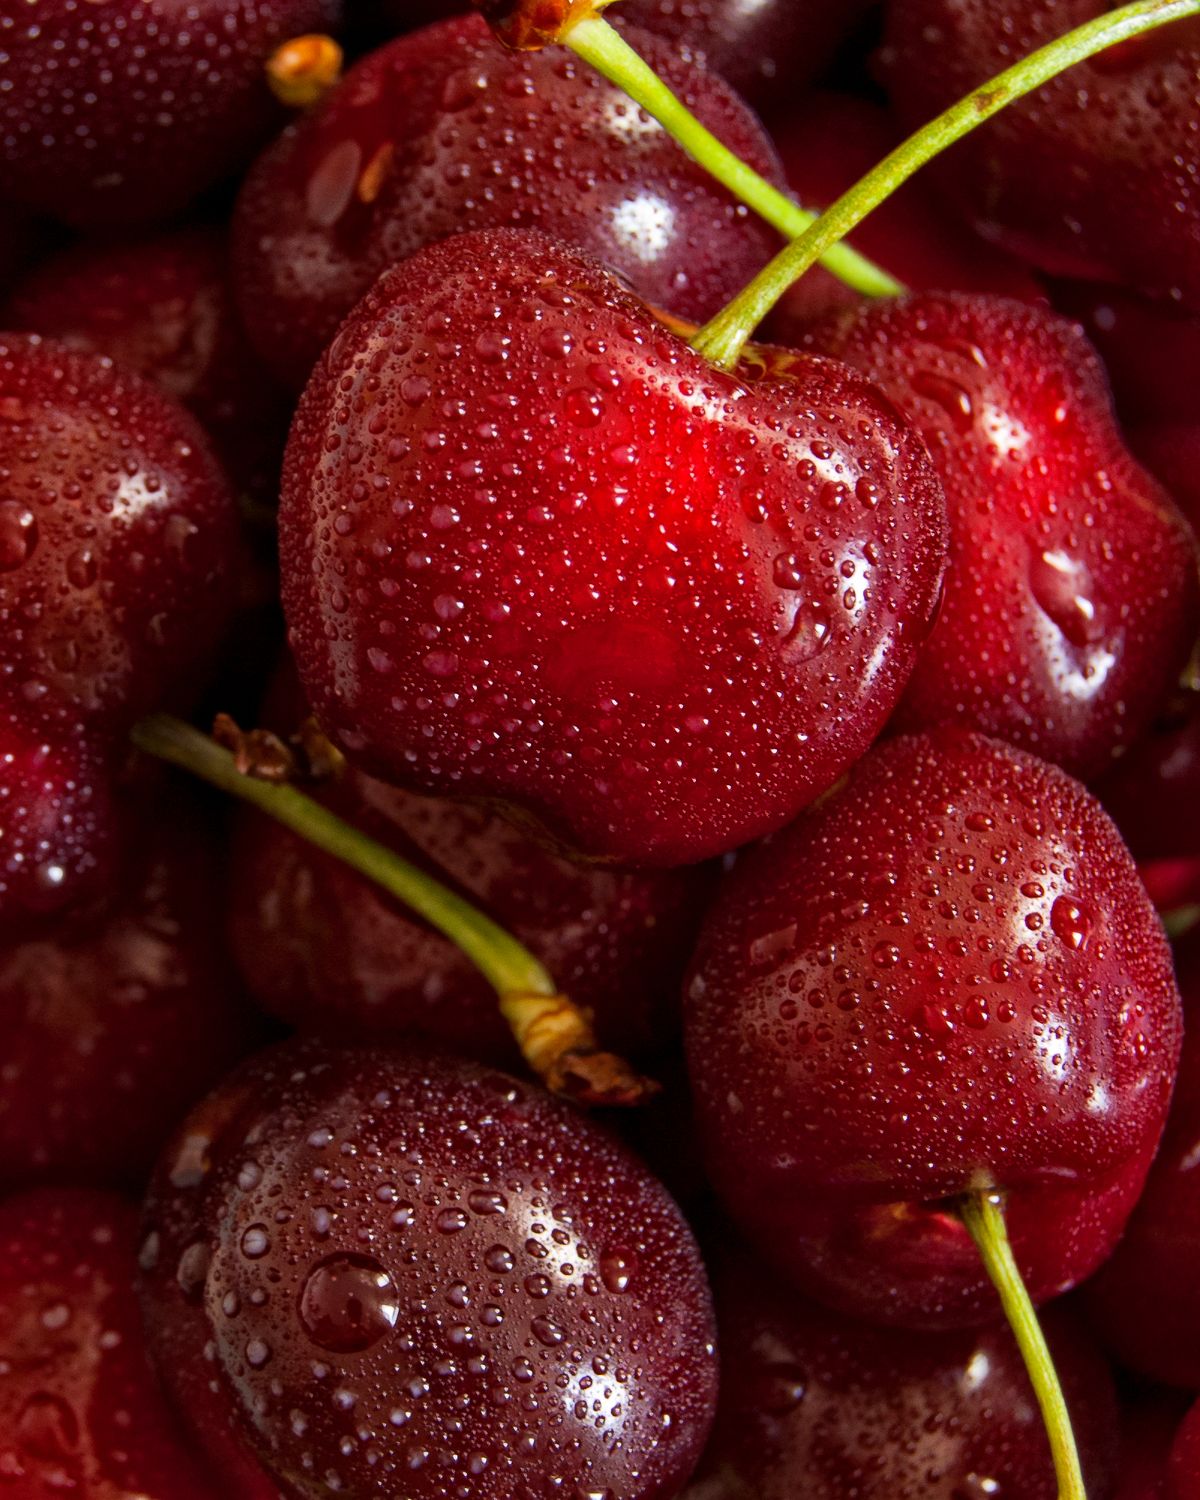 eating cherries on keto diet